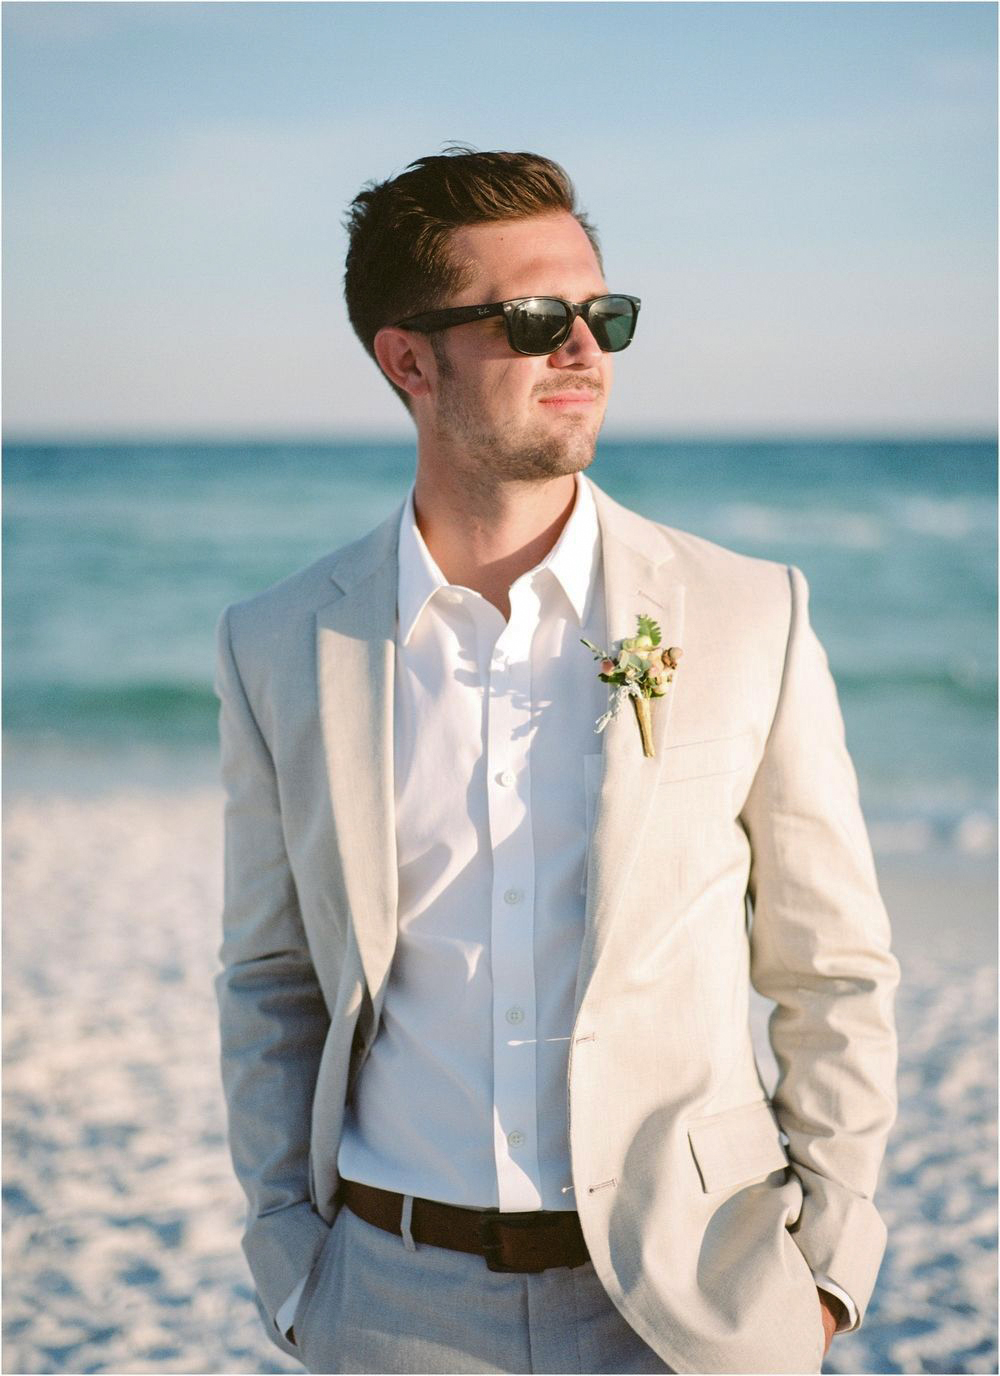 tan cotton suit for summer beach wedding attire